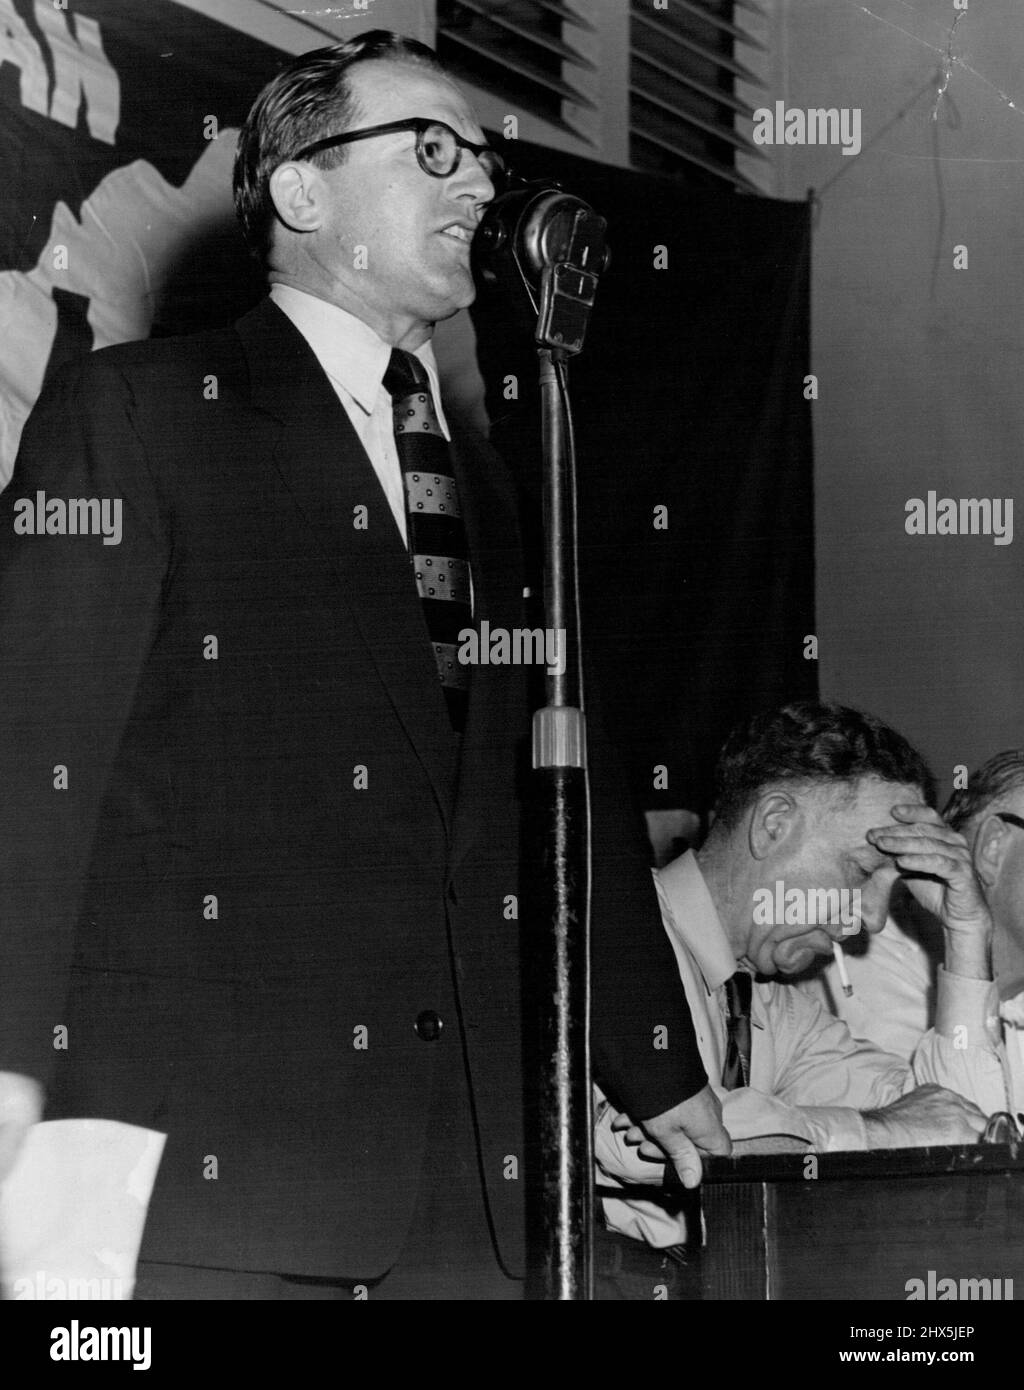 Laurie Short addressing ALP grouper meeting 13/2/55. February 15, 1955. Stock Photo